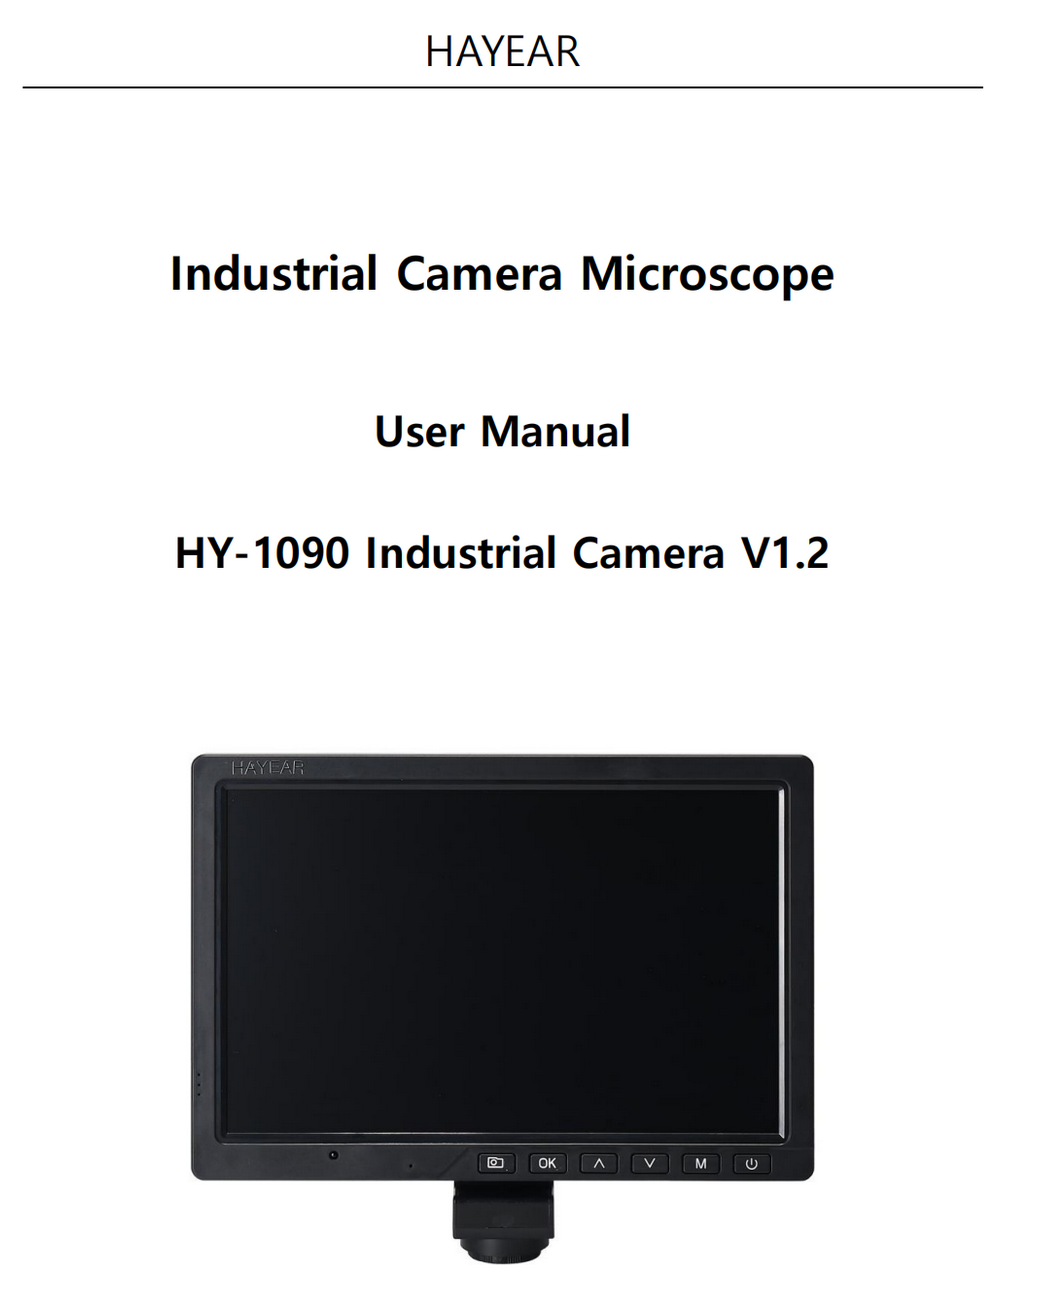 HY-1090 Industrial Camera User Manual